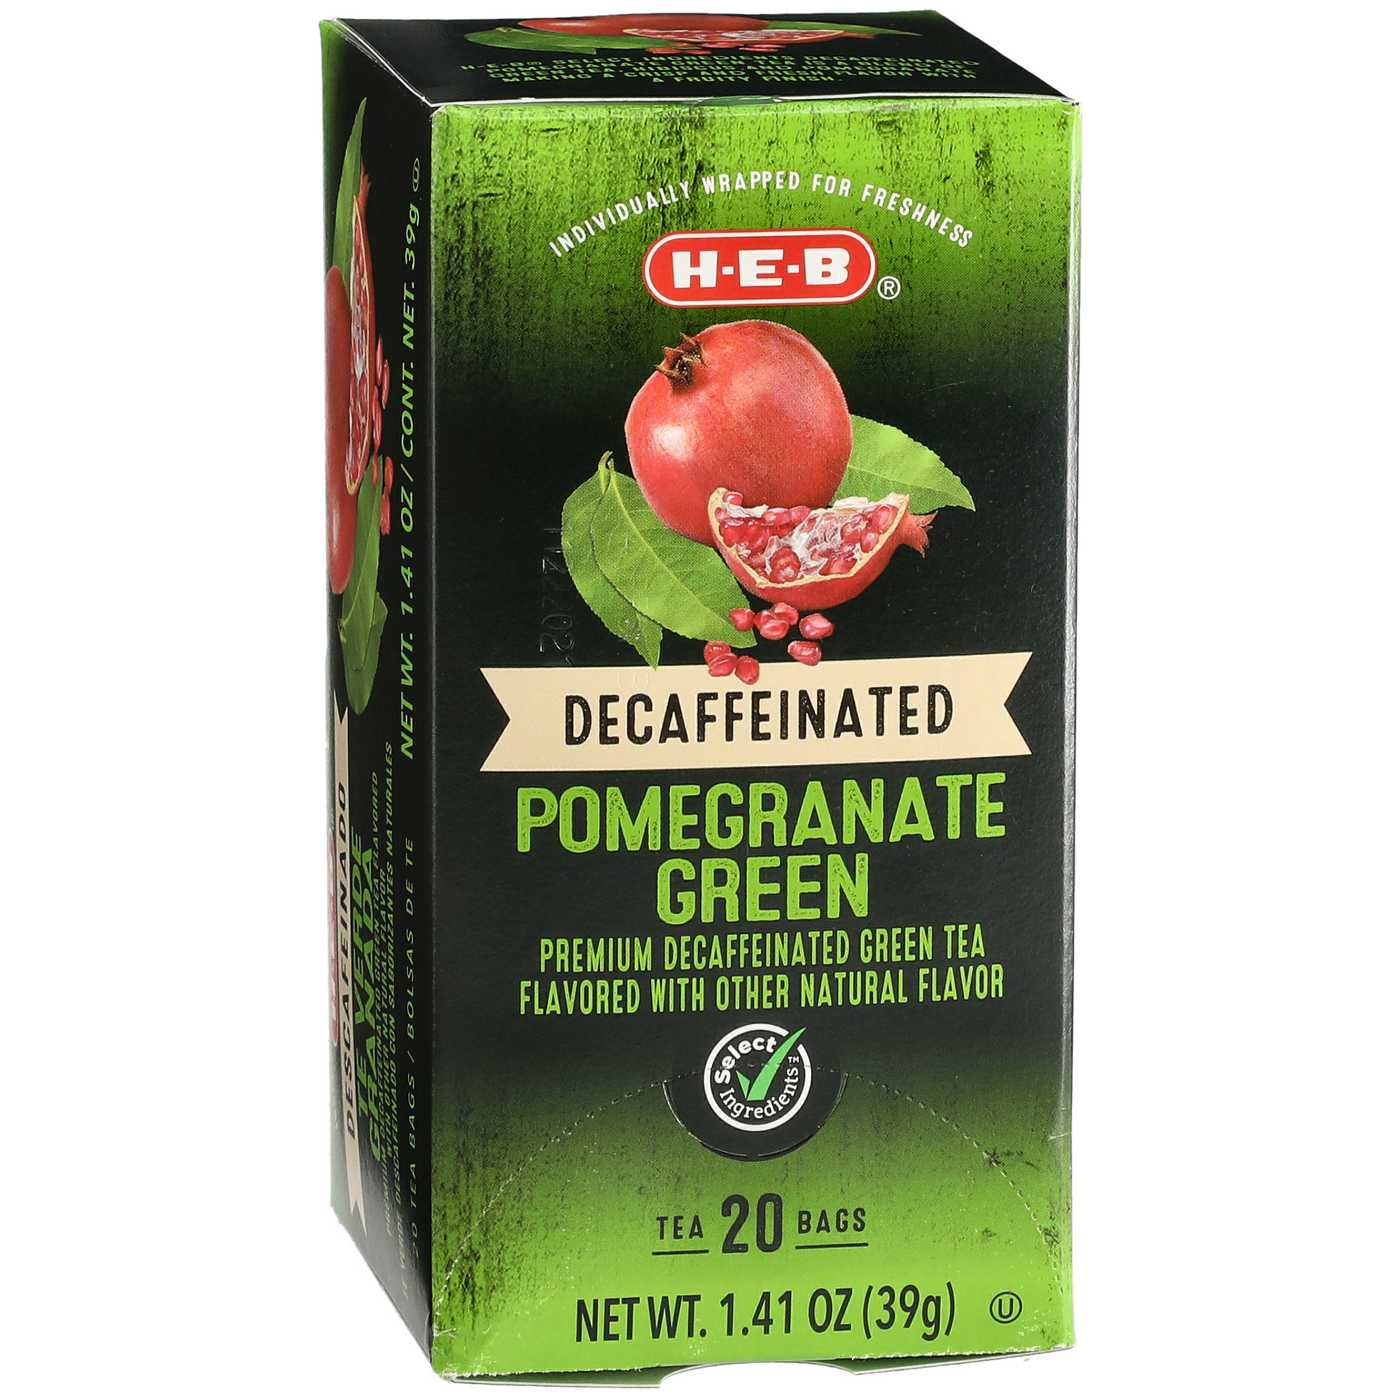 H-E-B Decaf Pomegranate Green Tea Bags; image 1 of 2